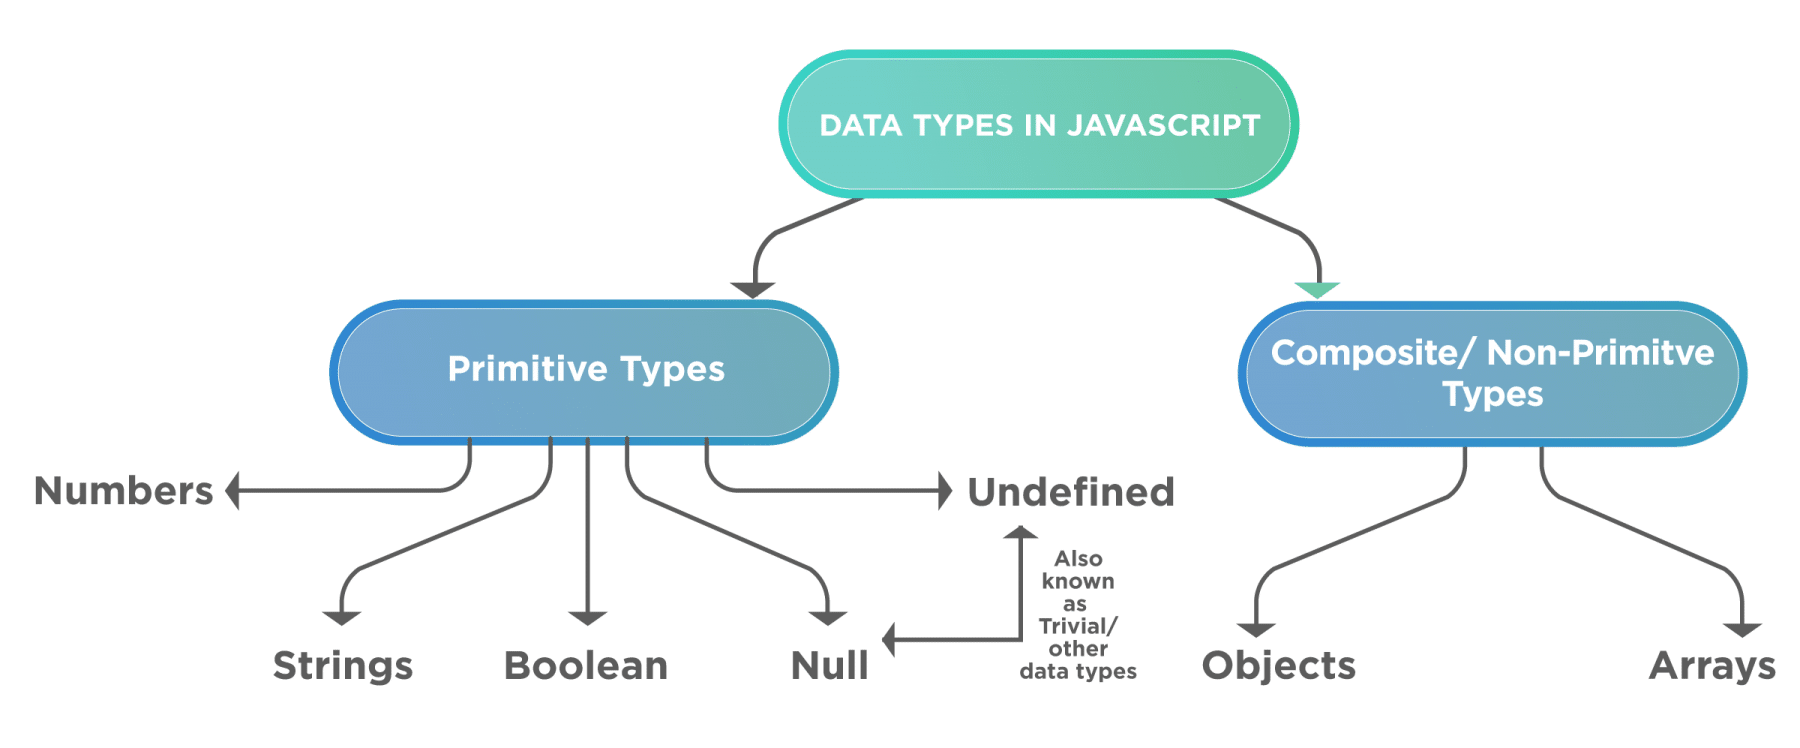  DataTypes in JavaScript - Copy